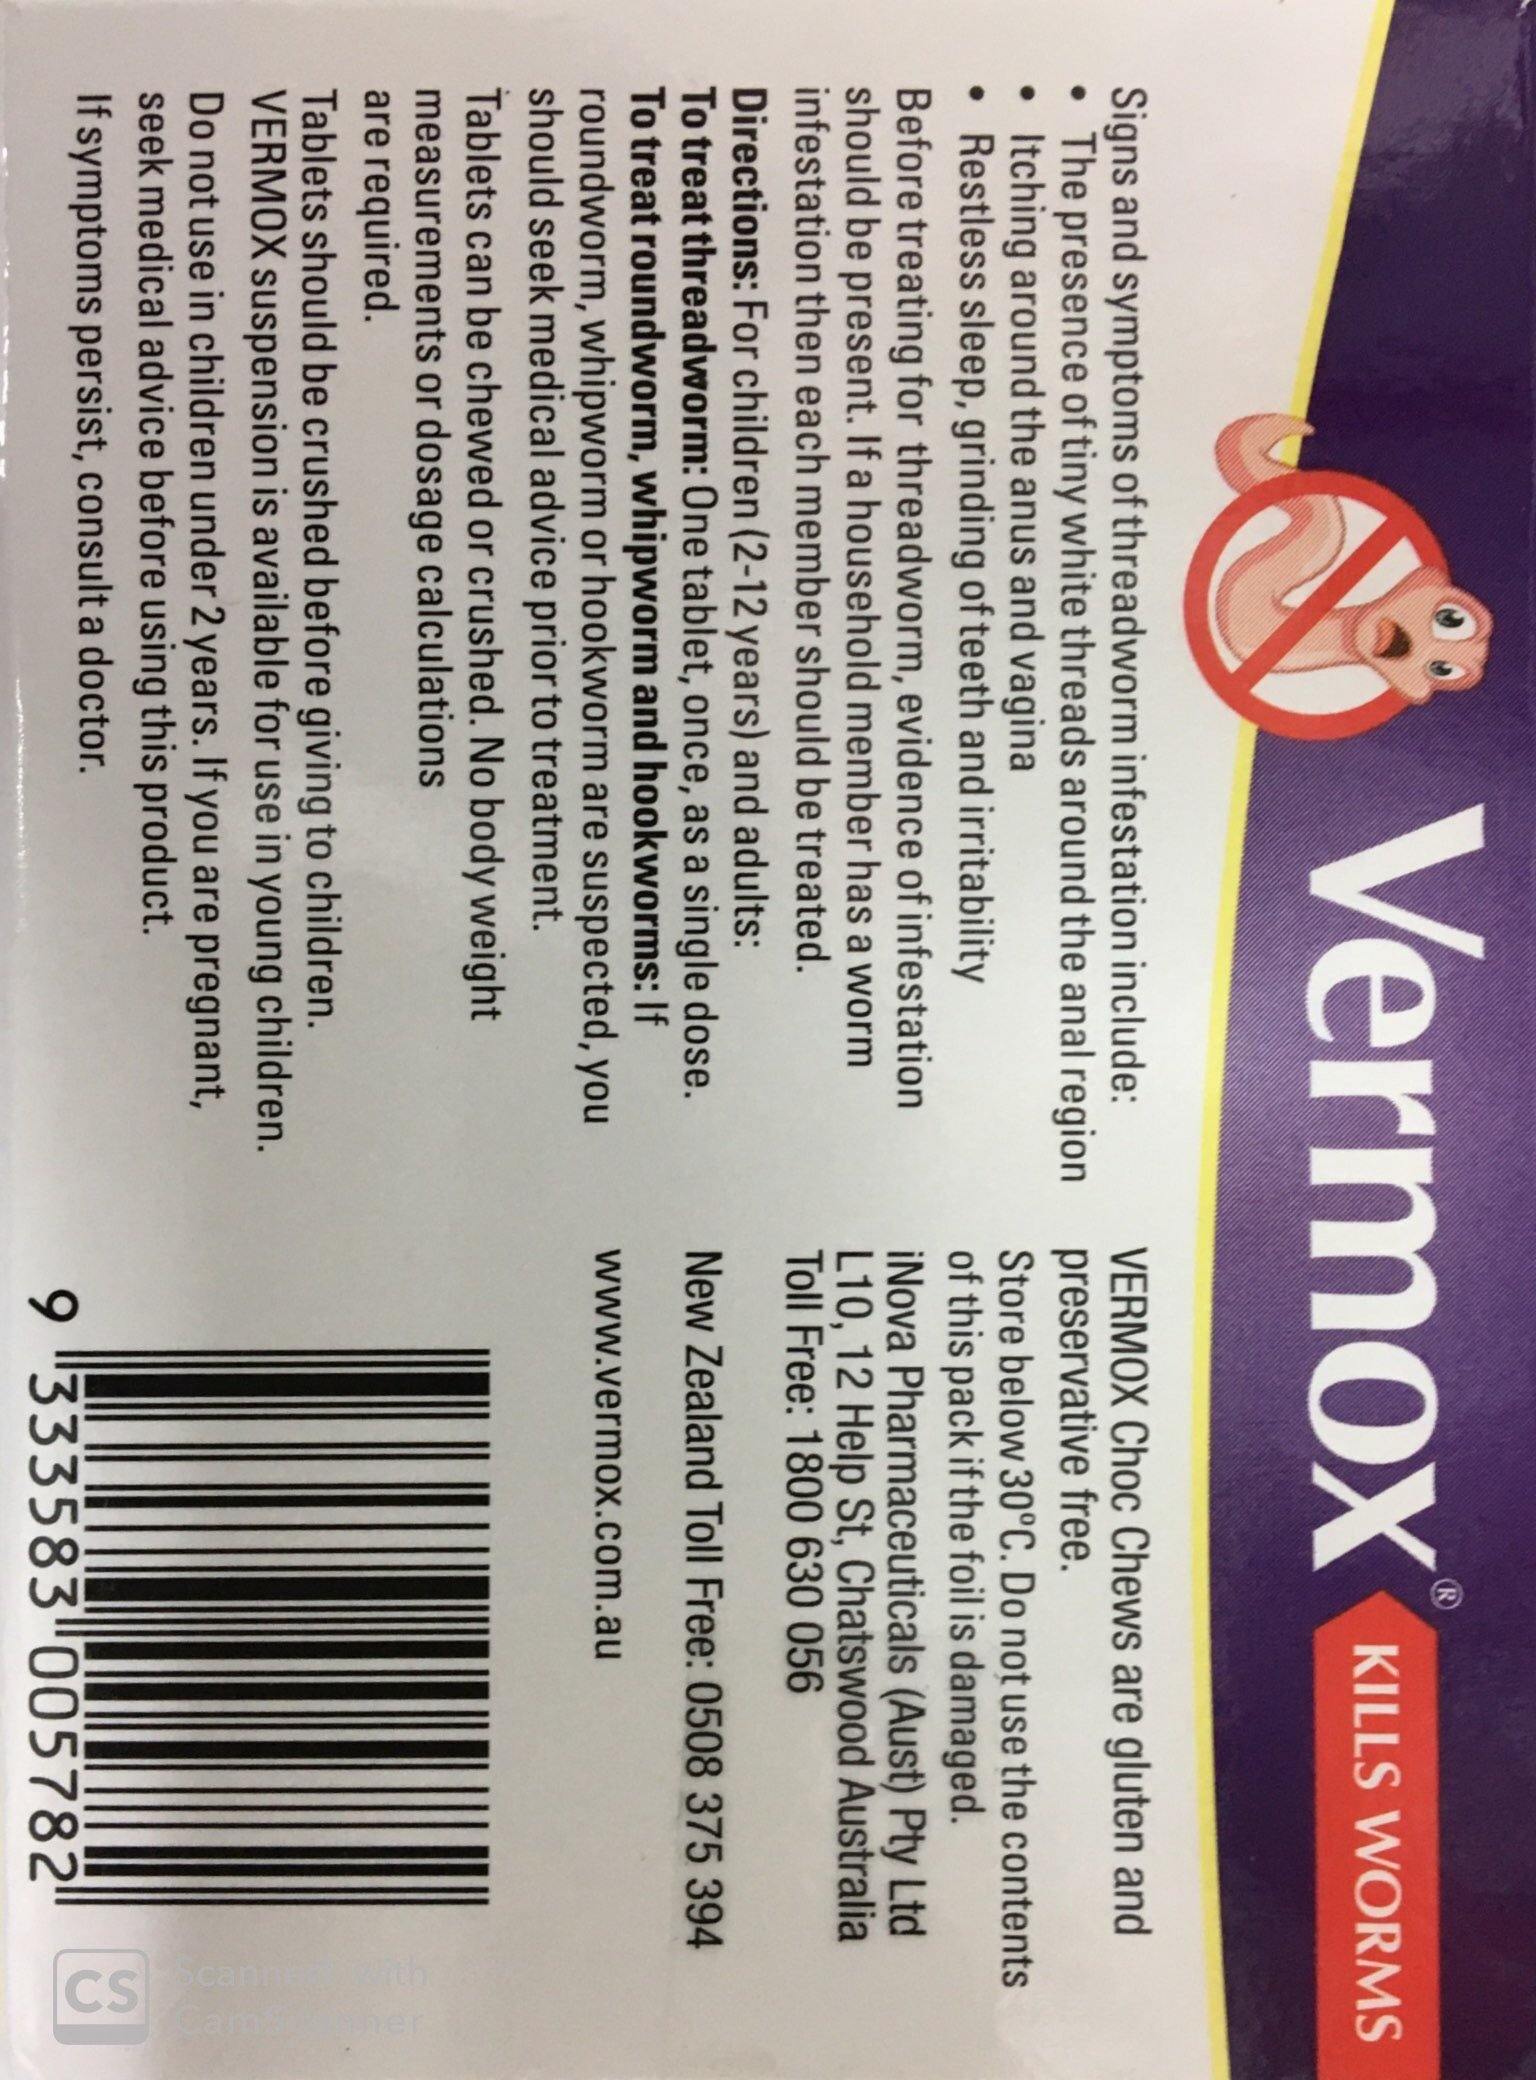 Vermox 4 choc chews